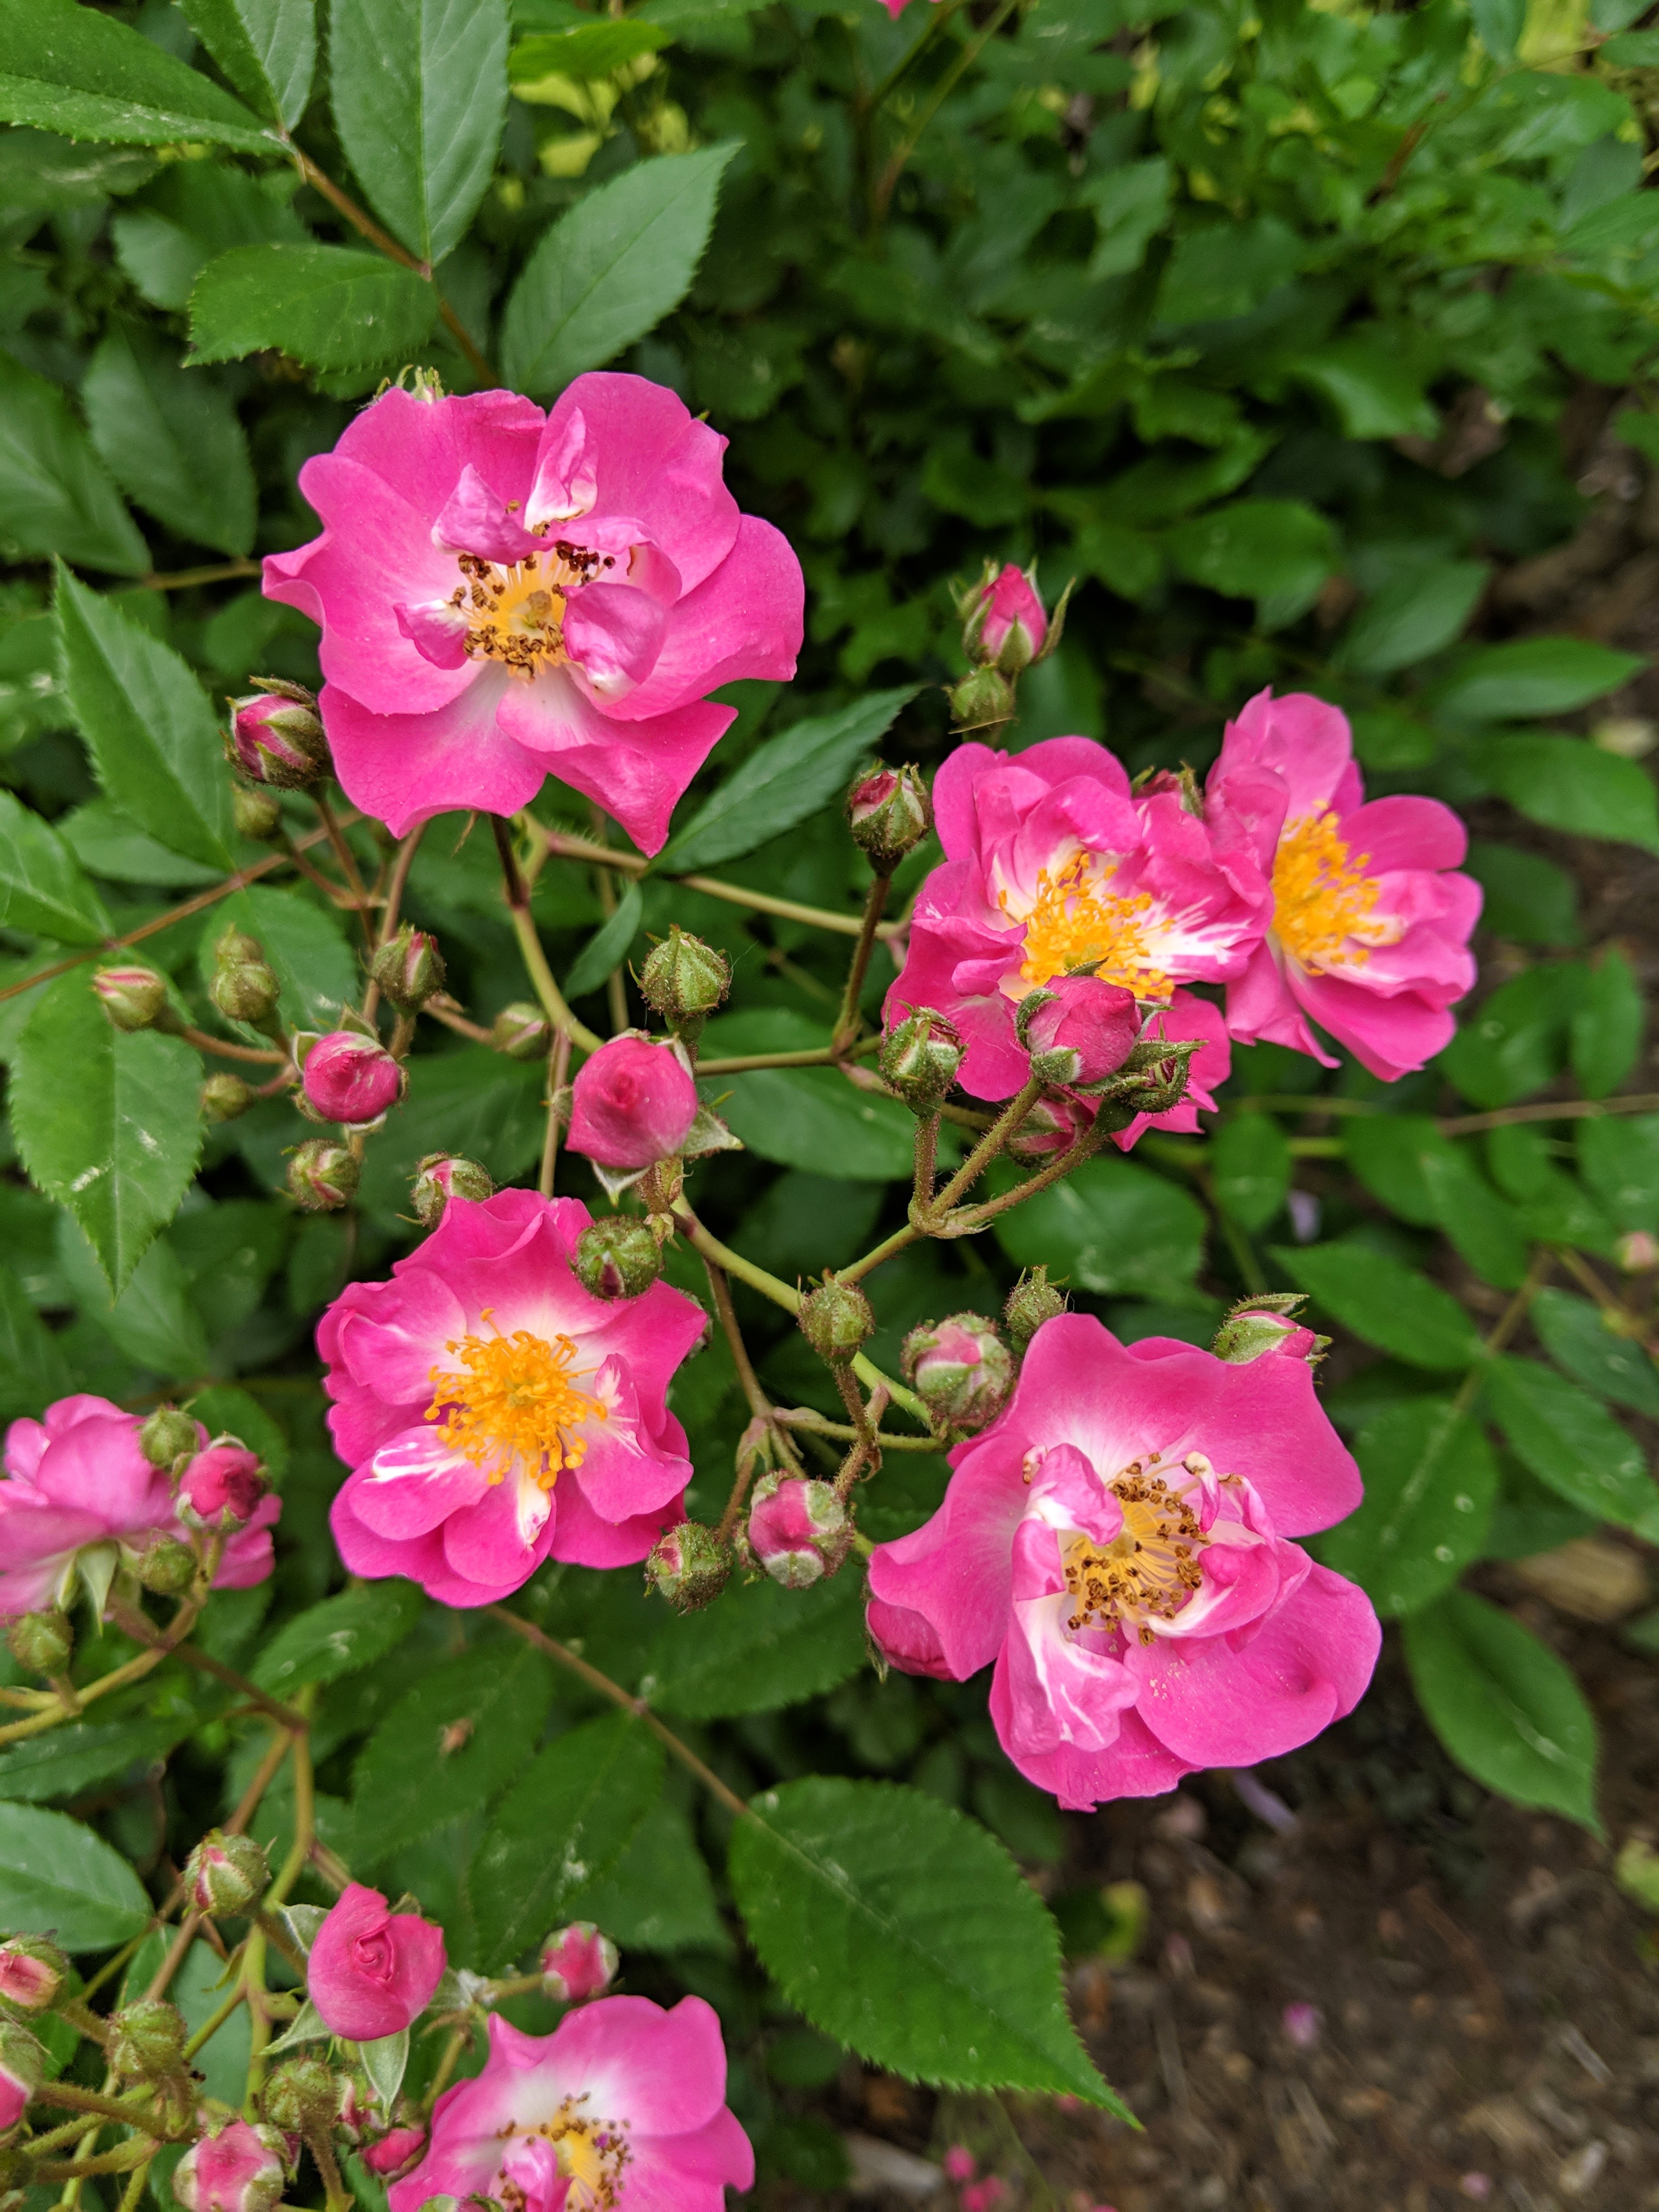 Blooming Roses at the Farm - The Martha Stewart Blog